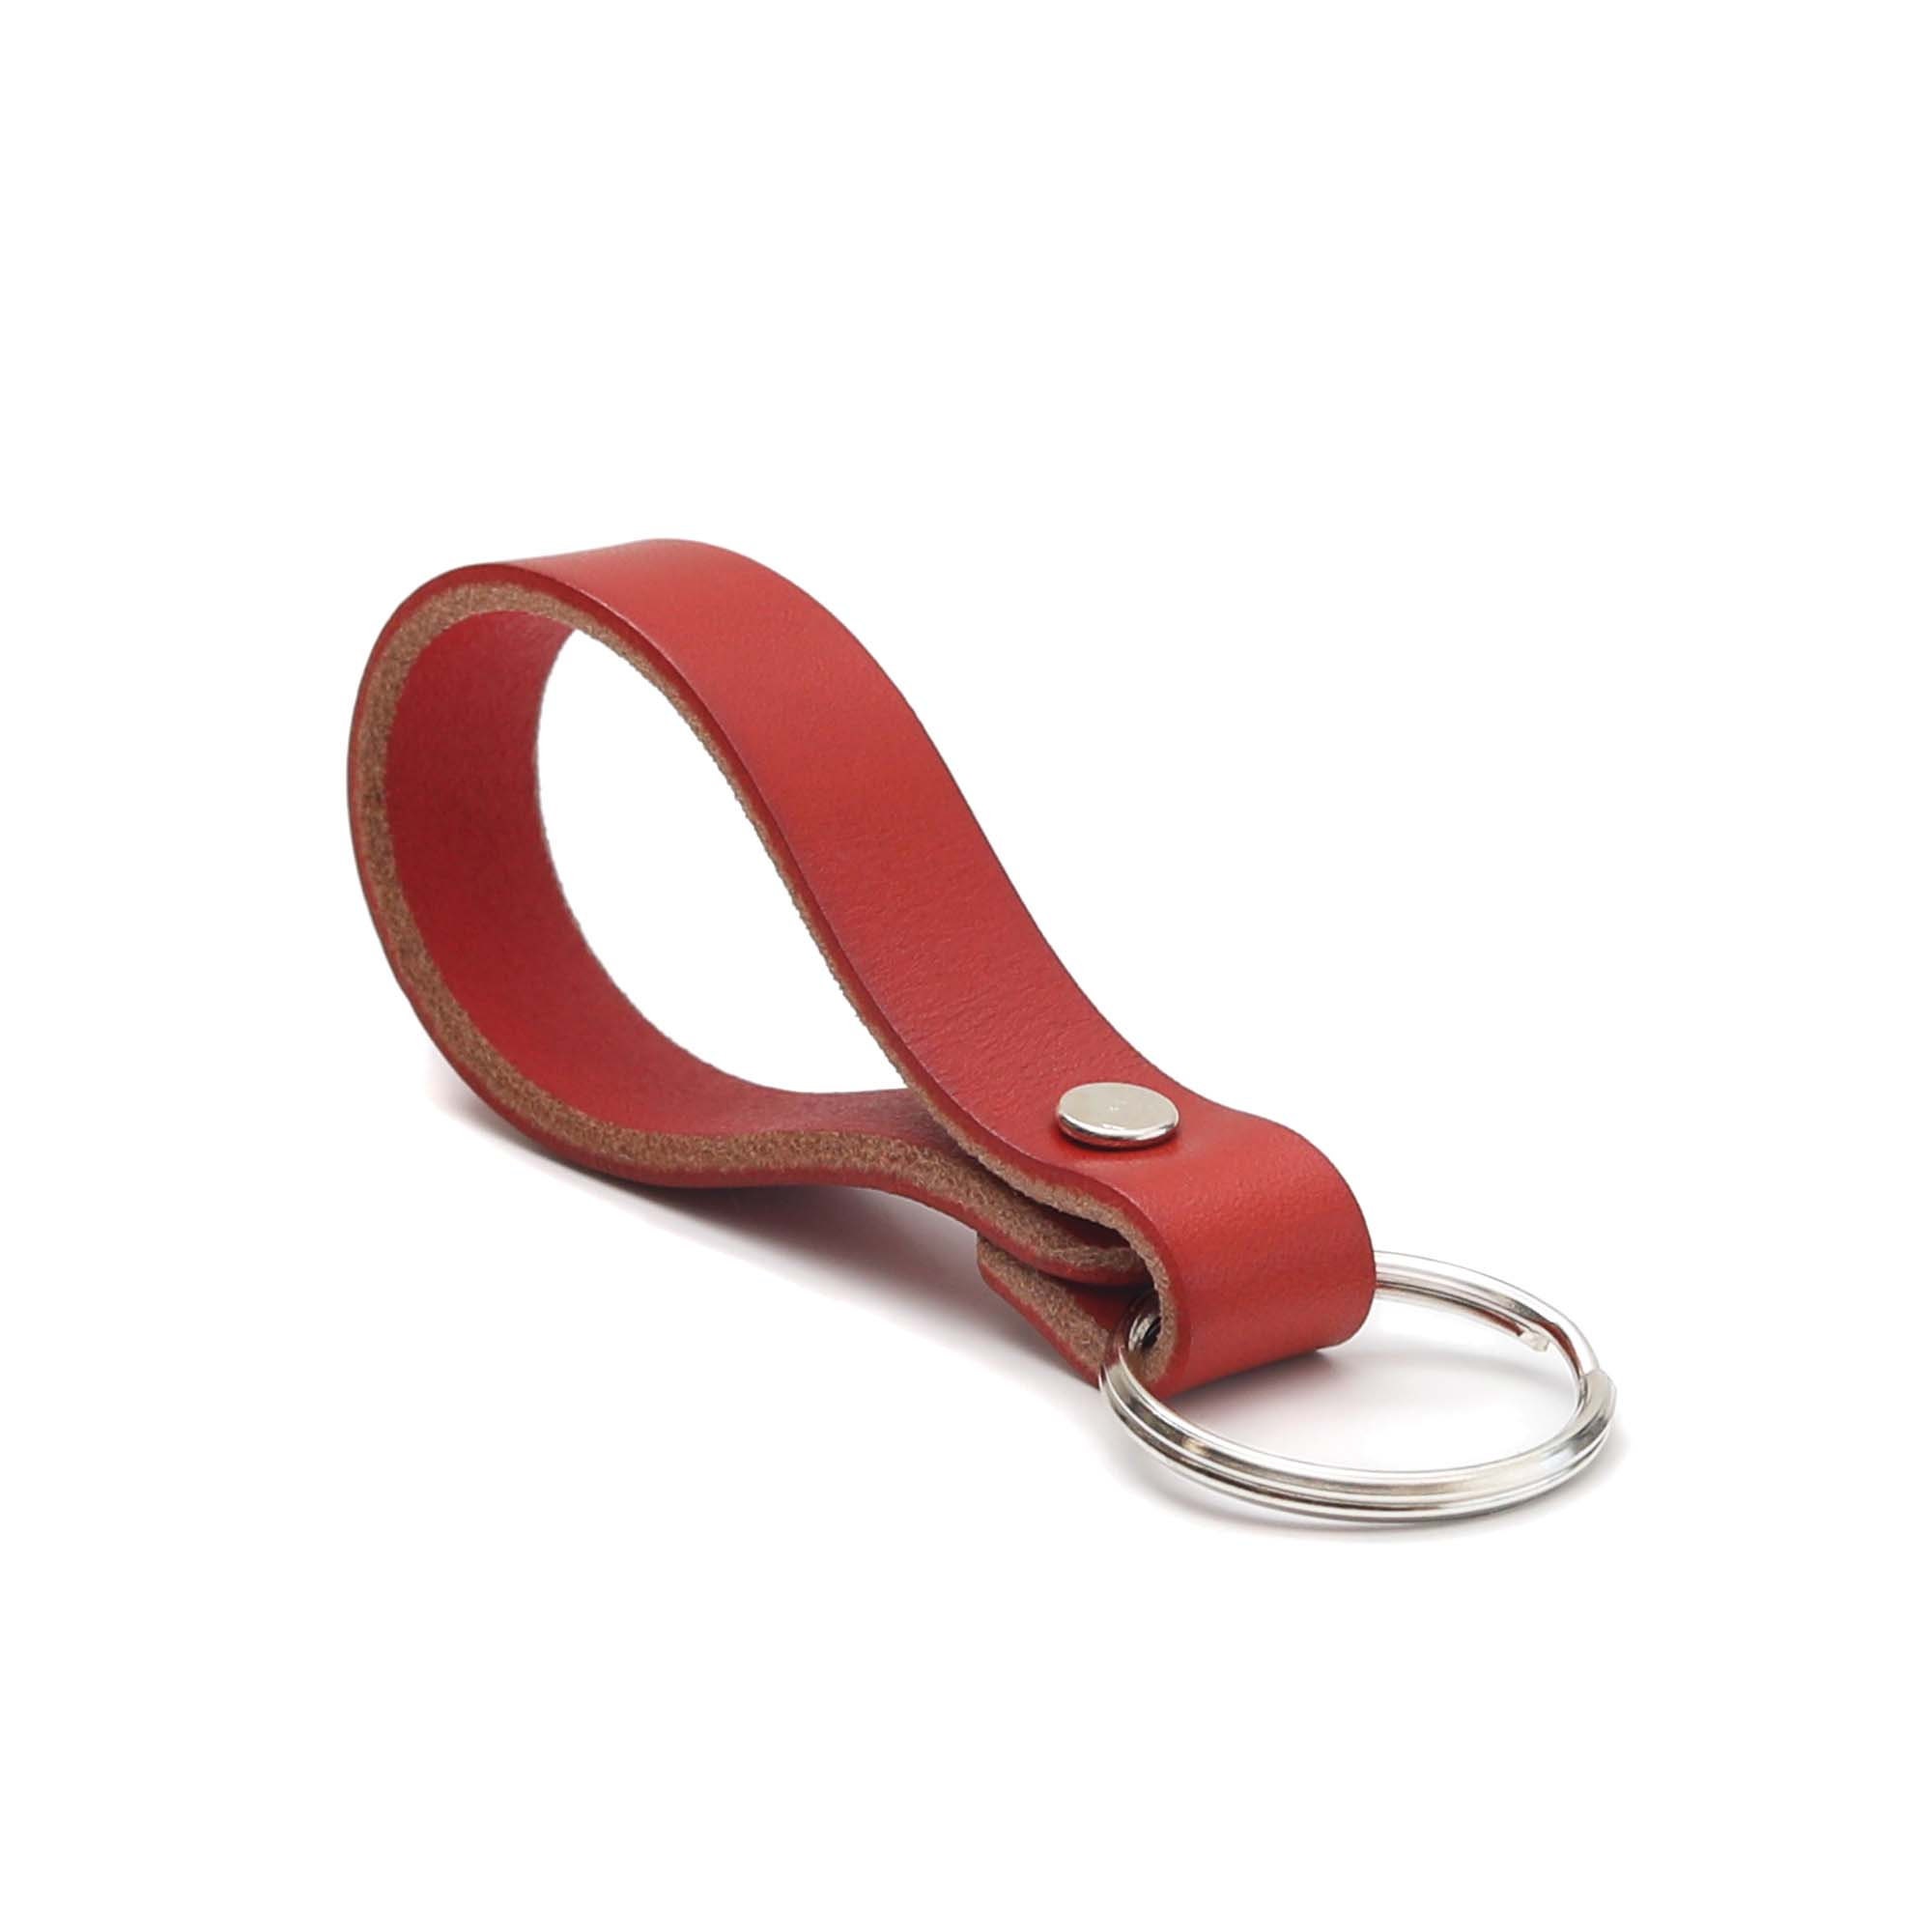 Leather Belt Key Hook Key Belt Lanyard Belt Key Holder Solid Brass